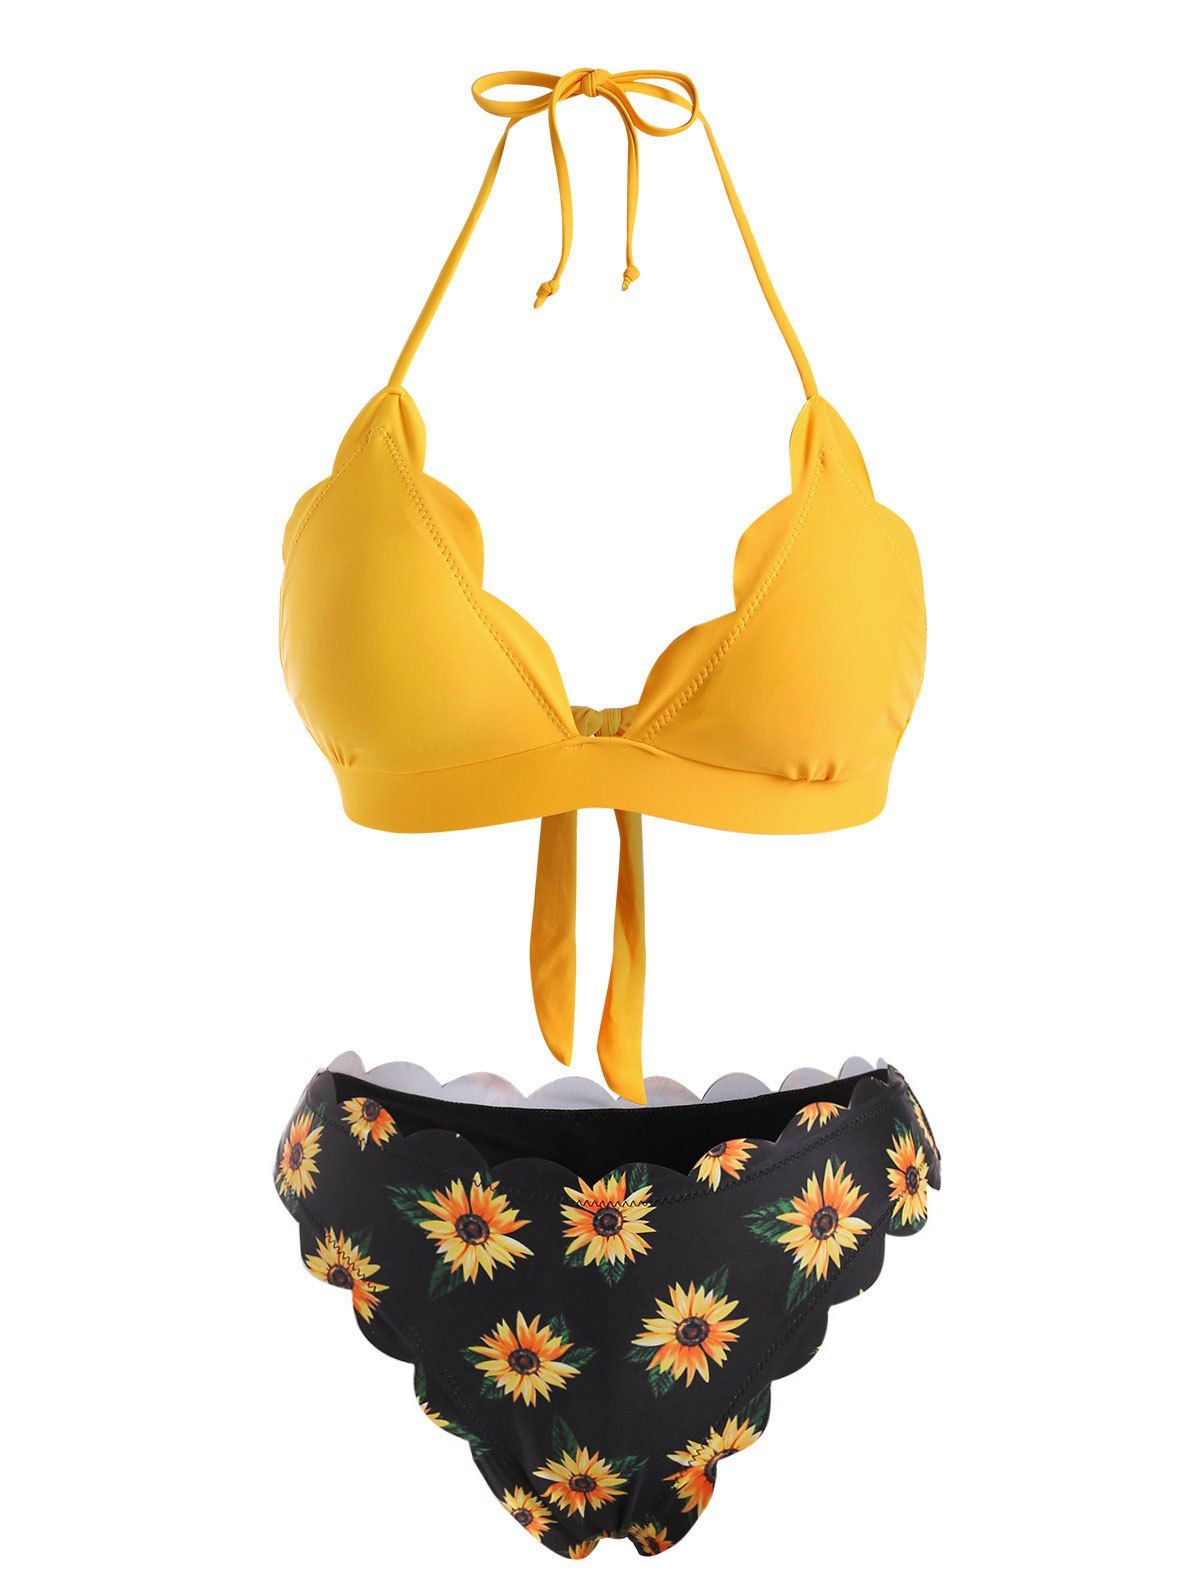 Halter Sunflower Scalloped Cheeky Bikini Swimwear - YELLOW L